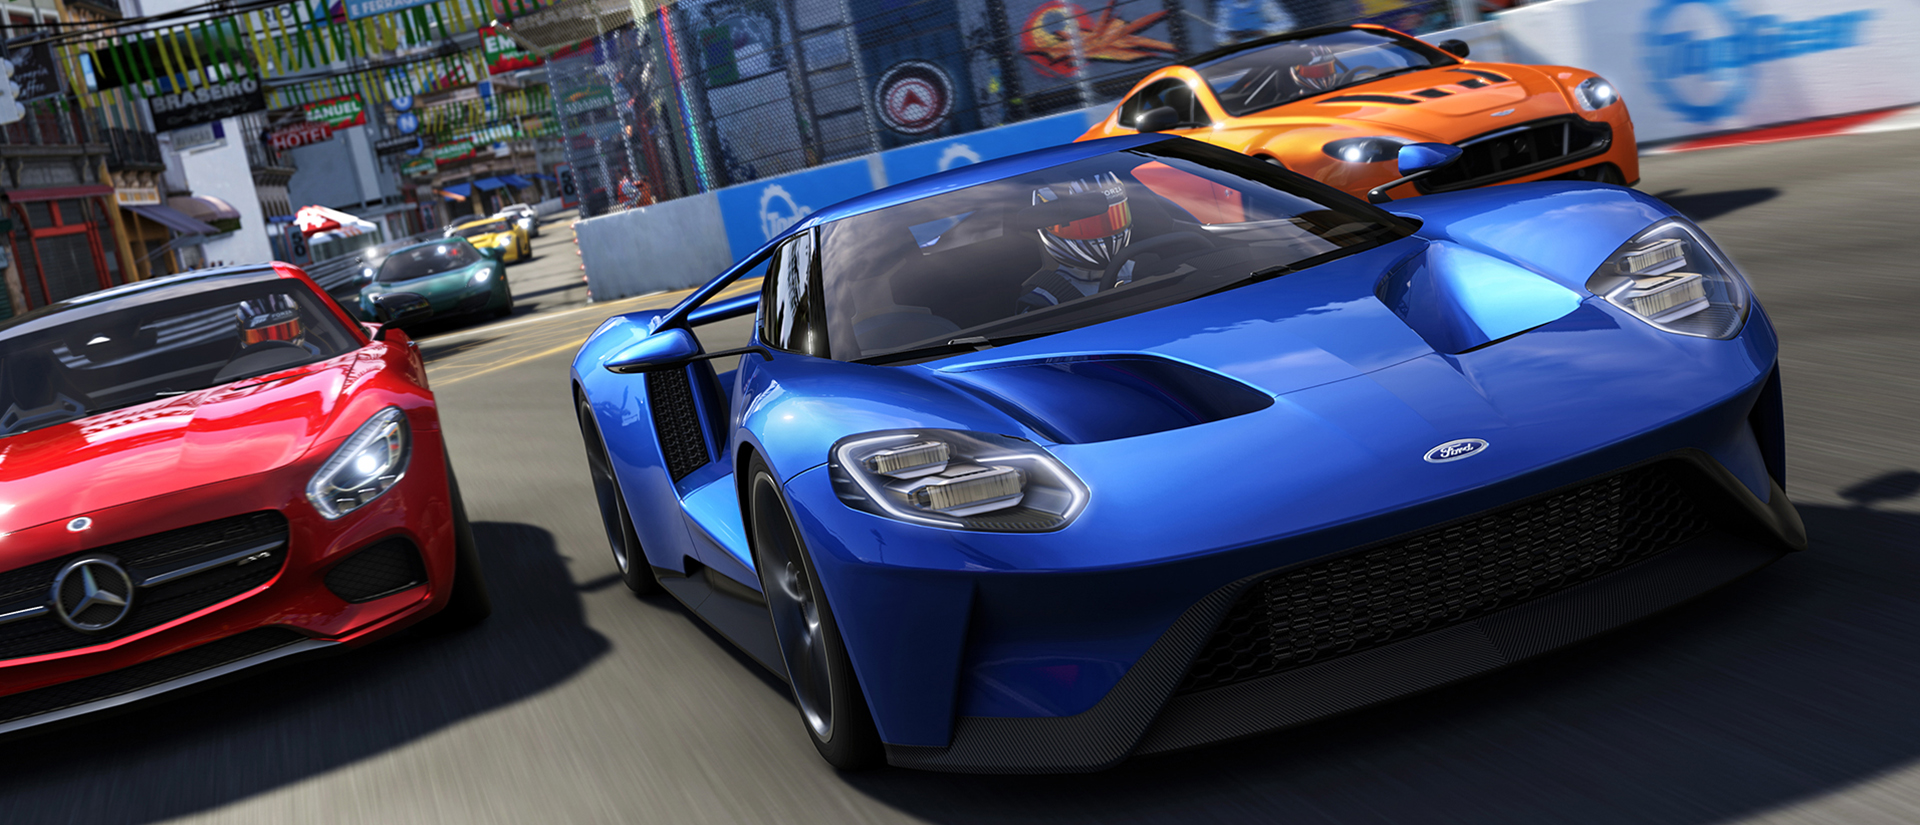 Forza Motorsport Backgrounds on Wallpapers Vista